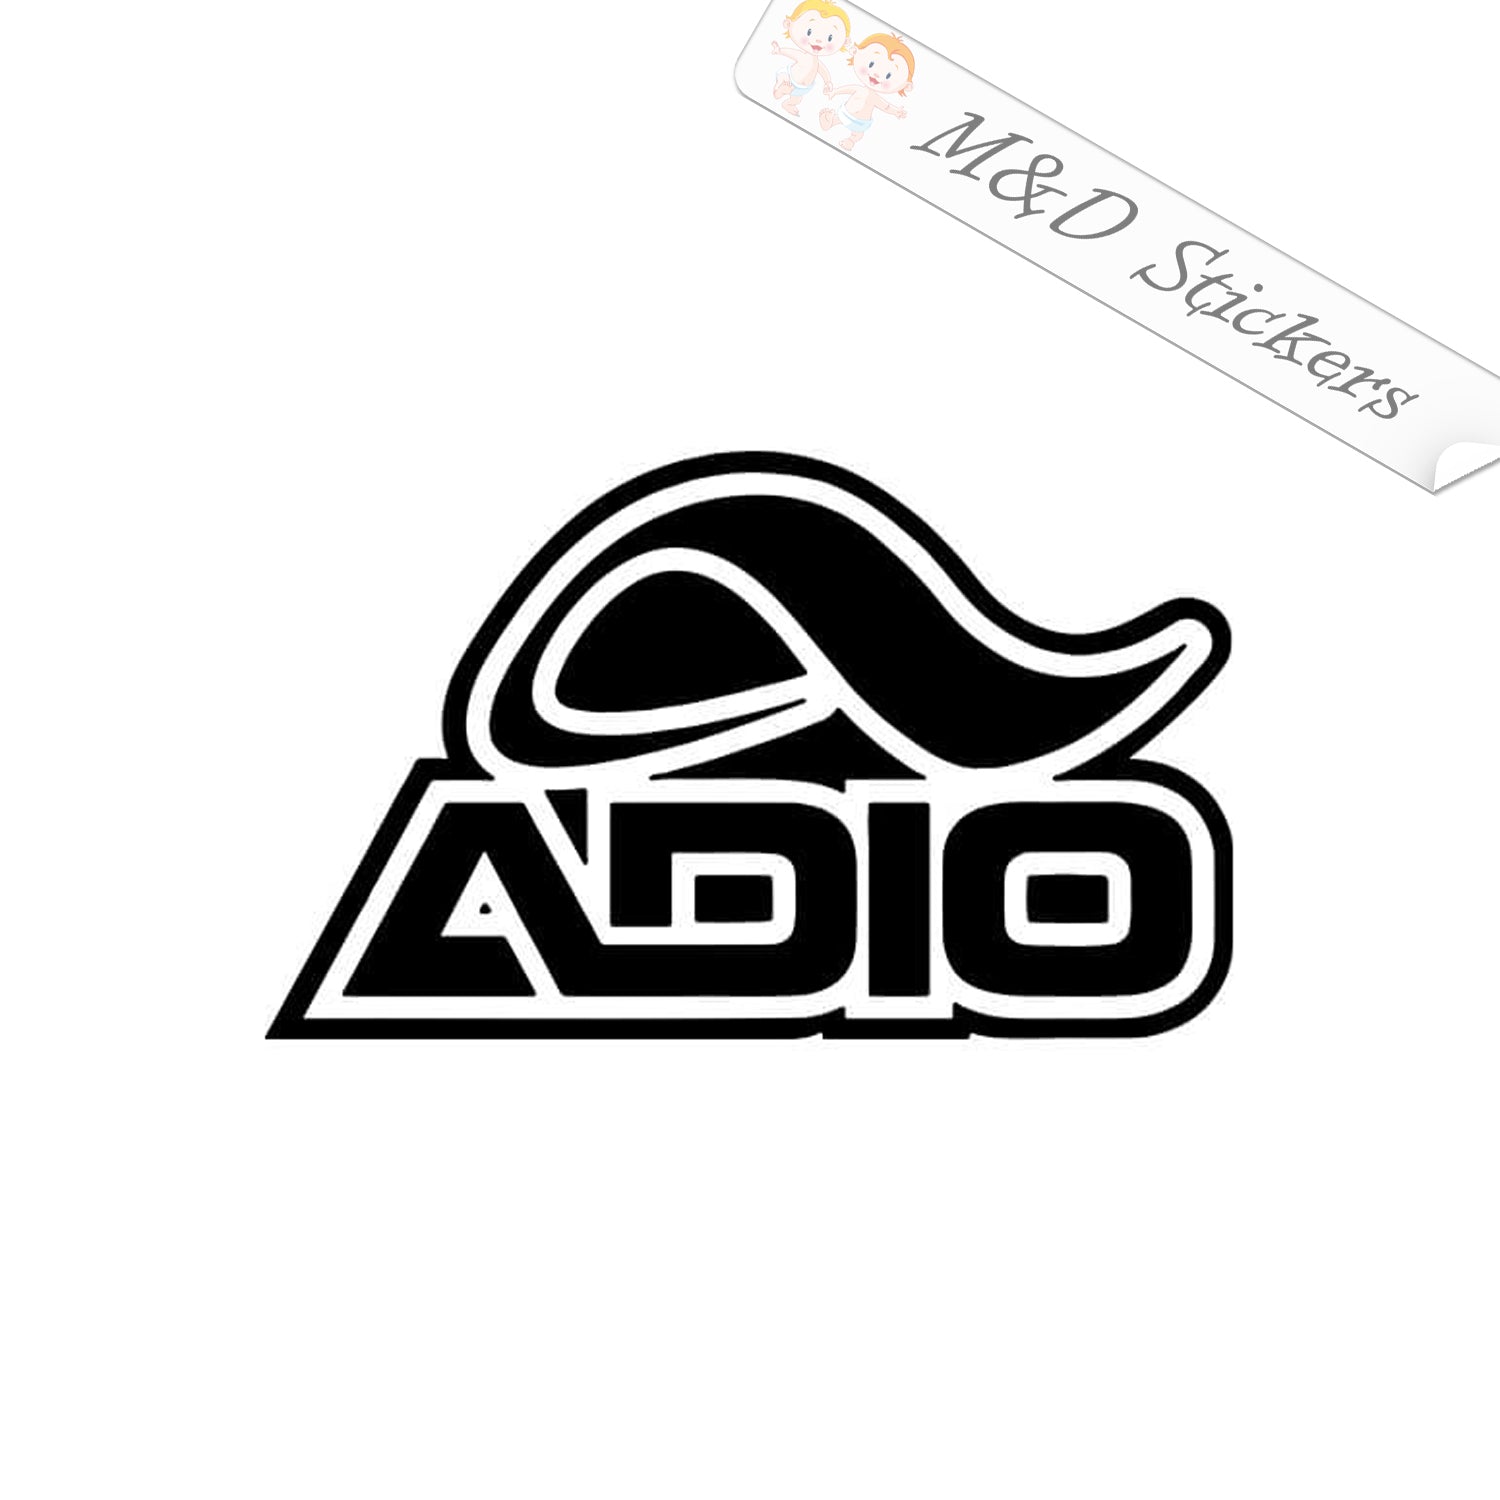 2x Adio skateboards Logo Vinyl Decal 